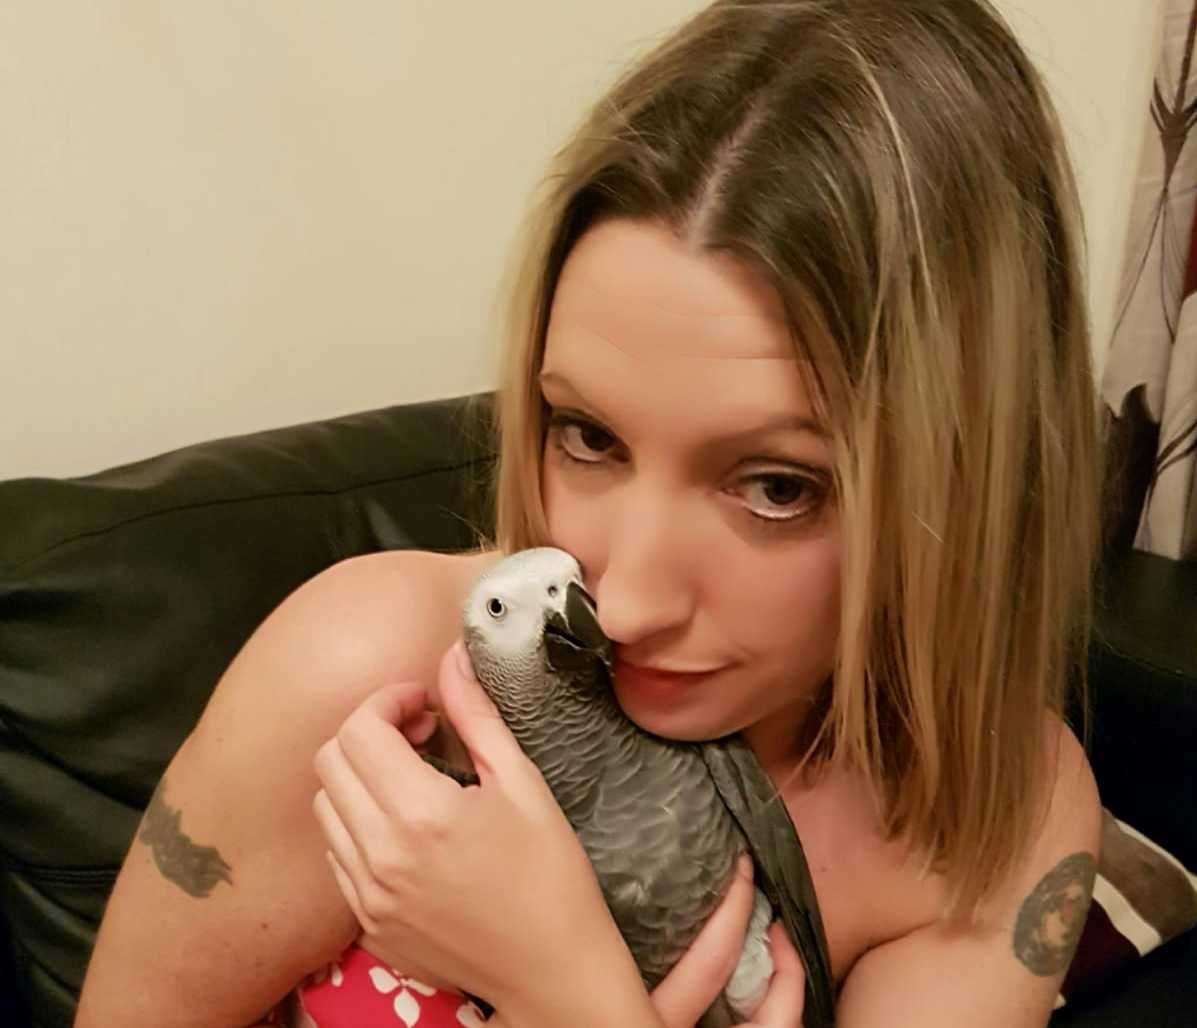 Elle Mier believes her beloved parrot Freddie is still alive, despite being missing for the last week